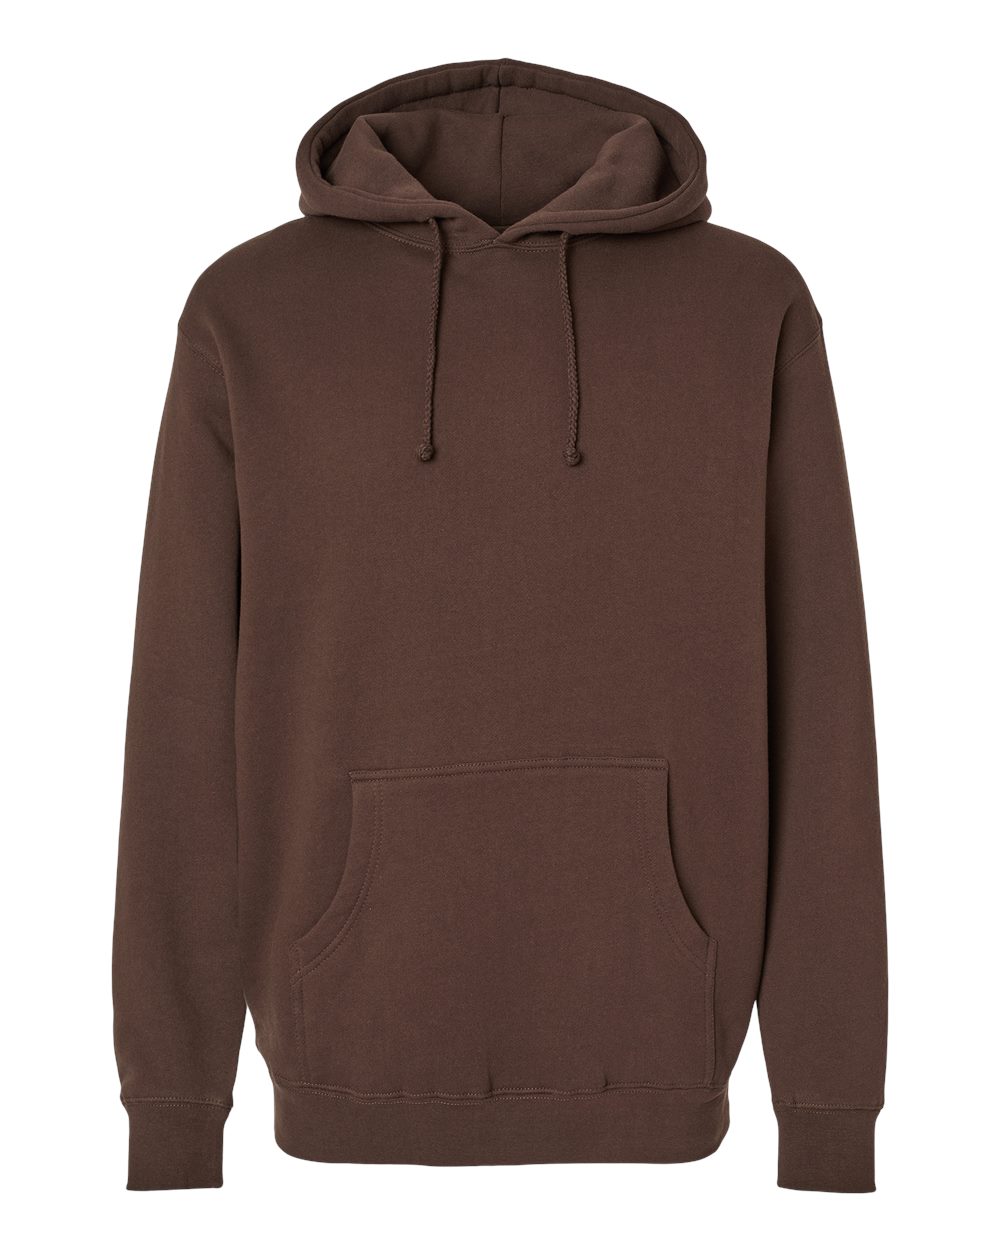 https://images.shirtspace.com/fullsize/OKV1Ufcfw0mCvms1RsFBrg%3D%3D/418844/16116-independent-trading-co-ind4000-heavyweight-hooded-sweatshirt-front-brown.jpg